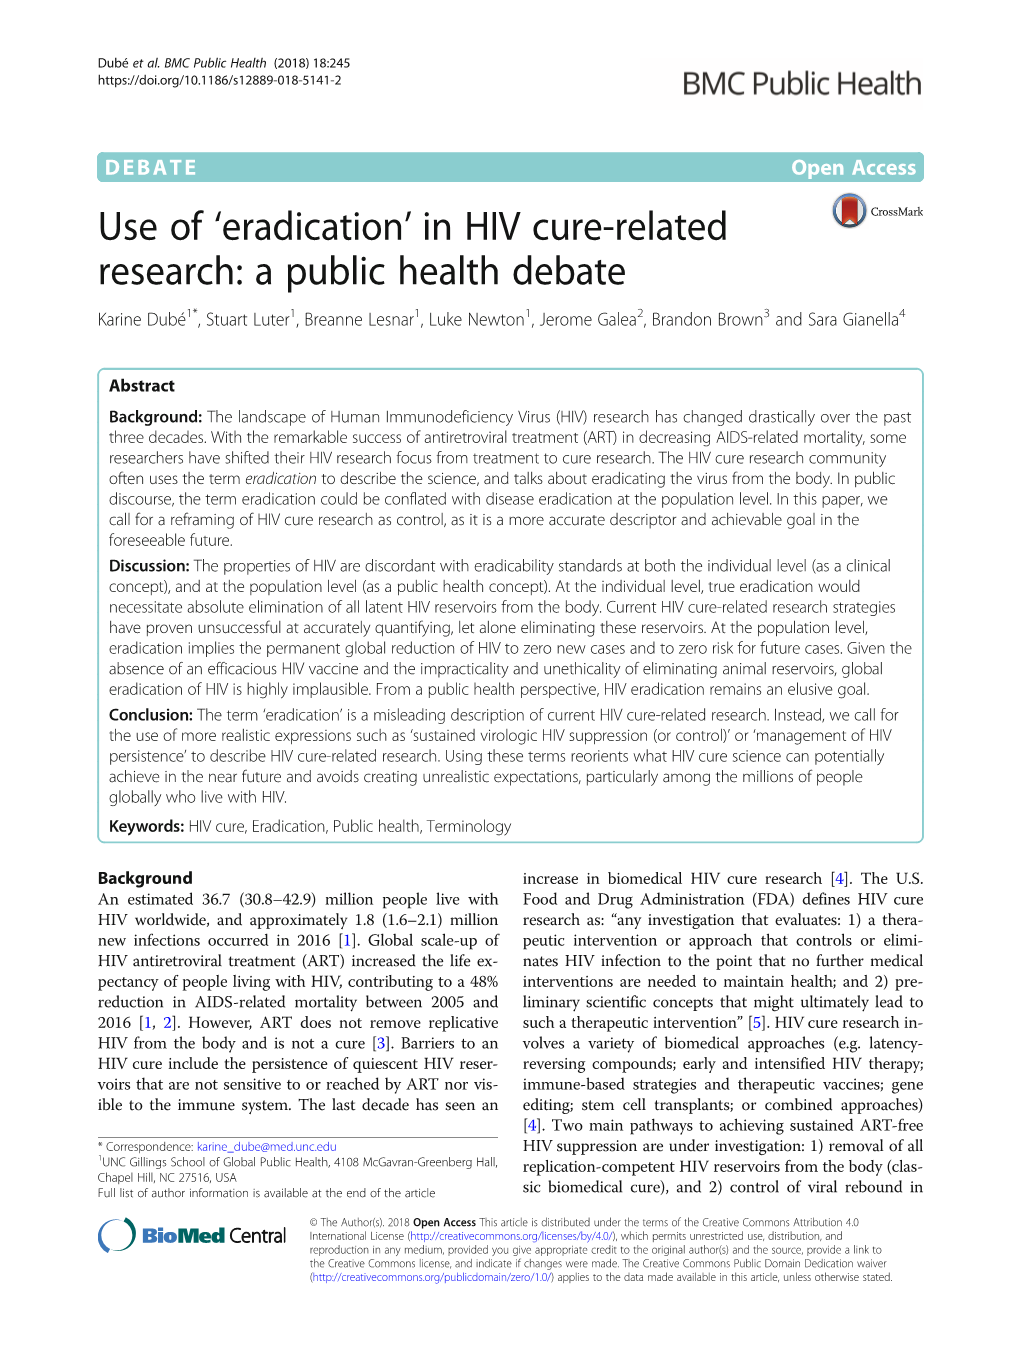 'Eradication' in HIV Cure-Related Research: a Public Health Debate